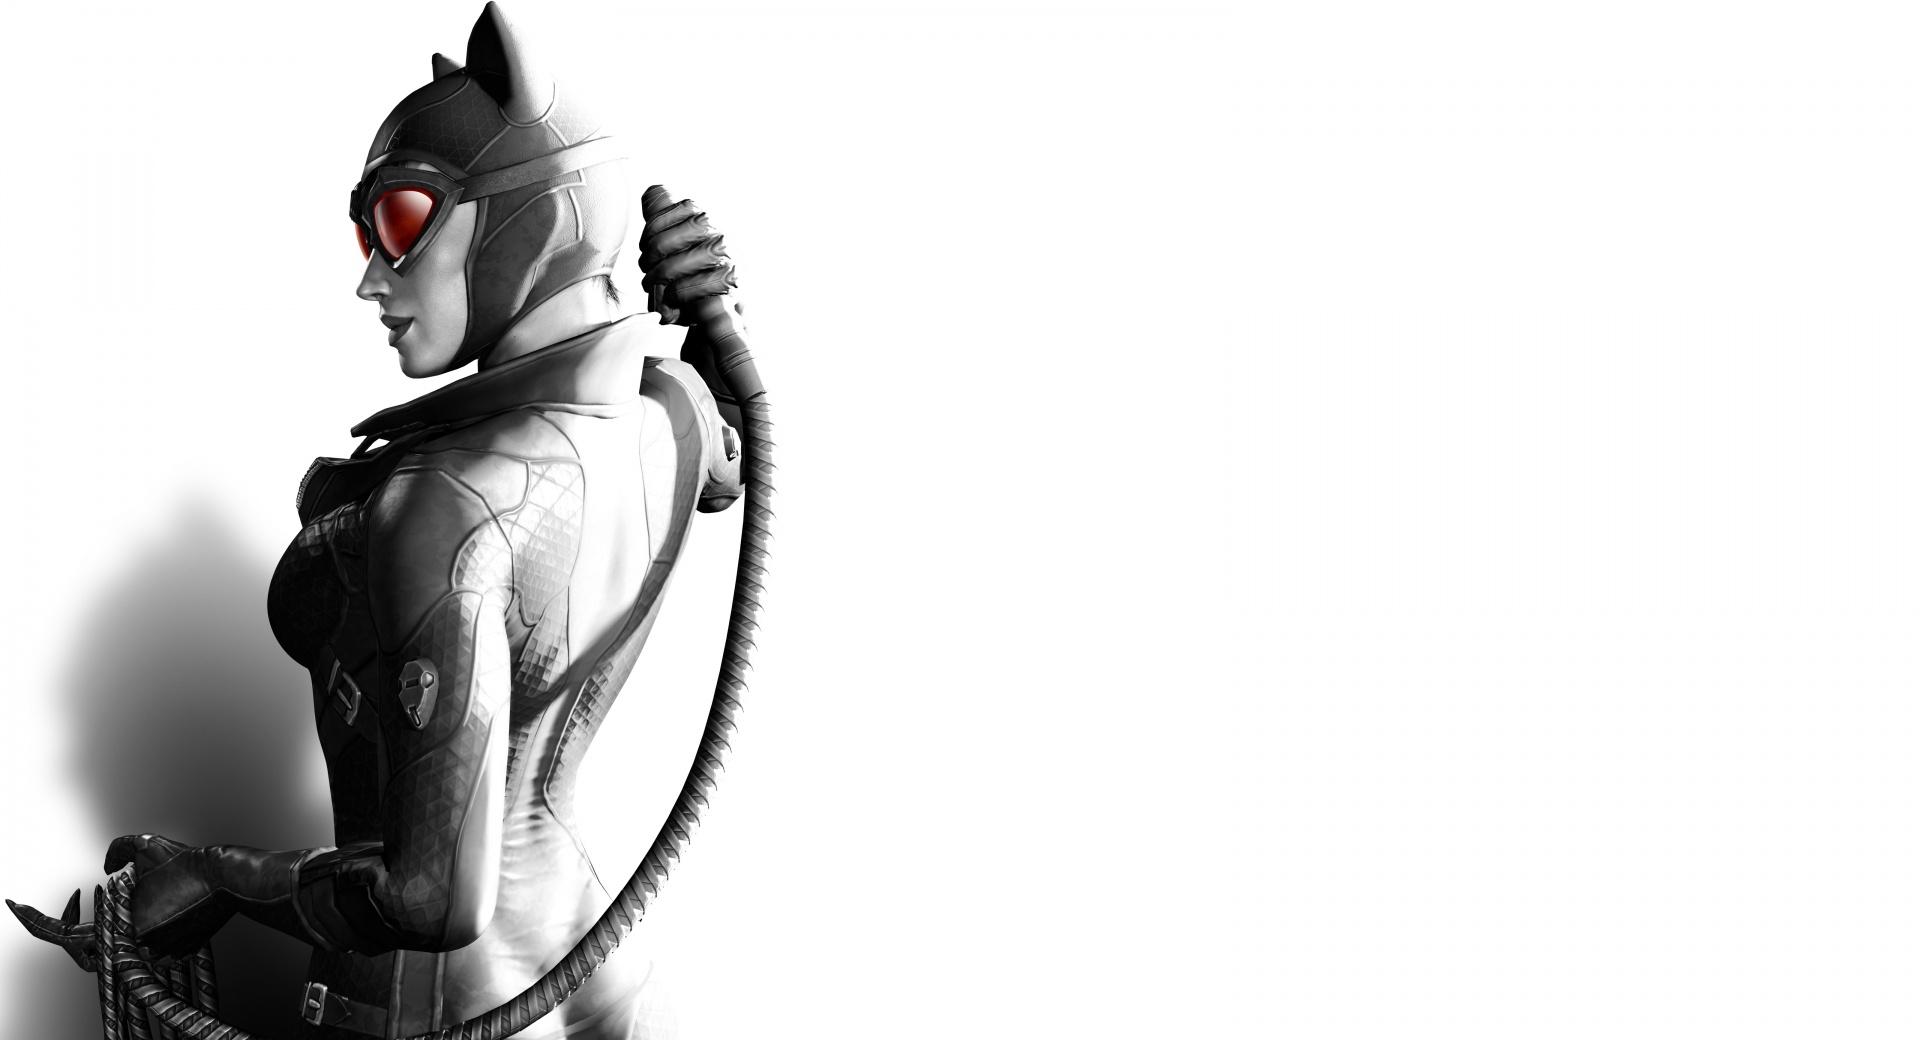 Batman Arkham City - Catwoman at 1280 x 960 size wallpapers HD quality